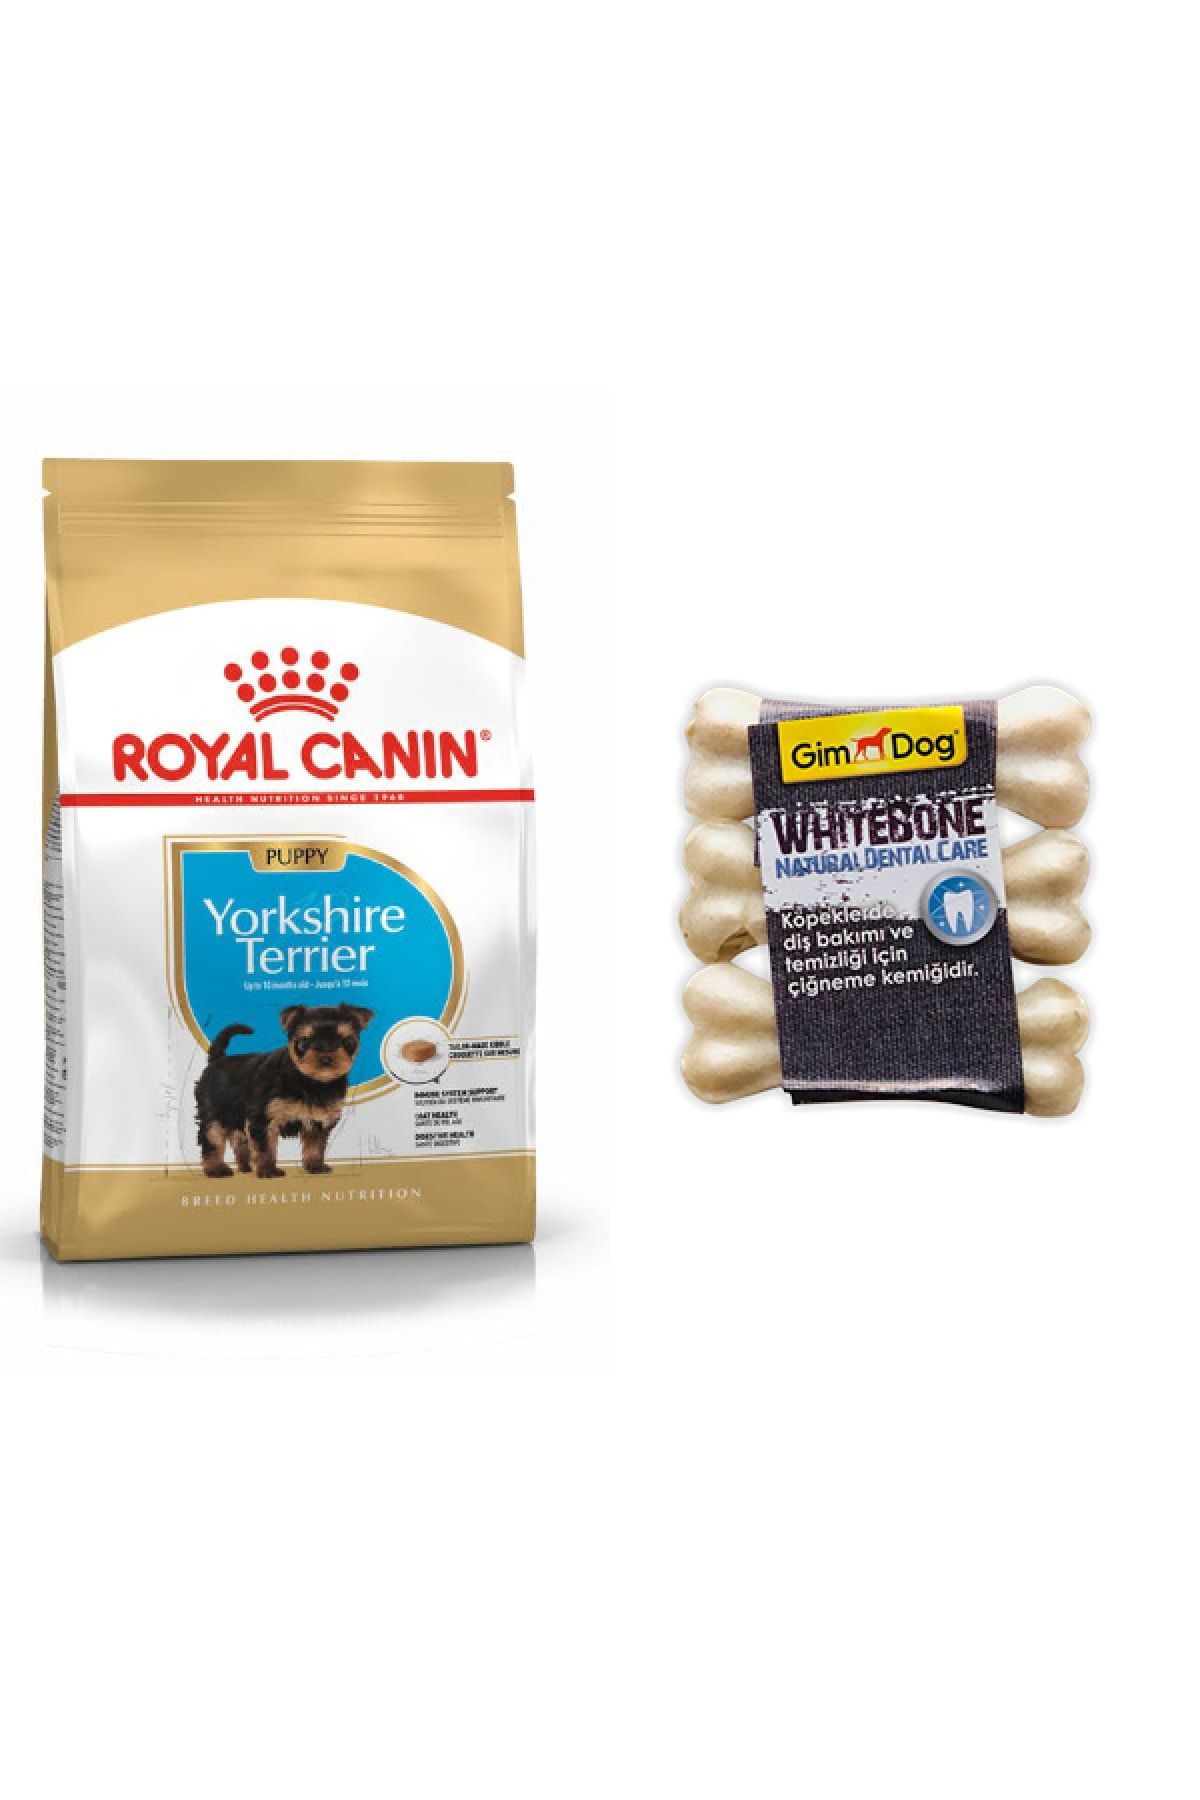 Royal Canin Chihuahua Puppy Köpek Maması 1,5 Kg +gimdog 3'lü Diş Dostu Kemik